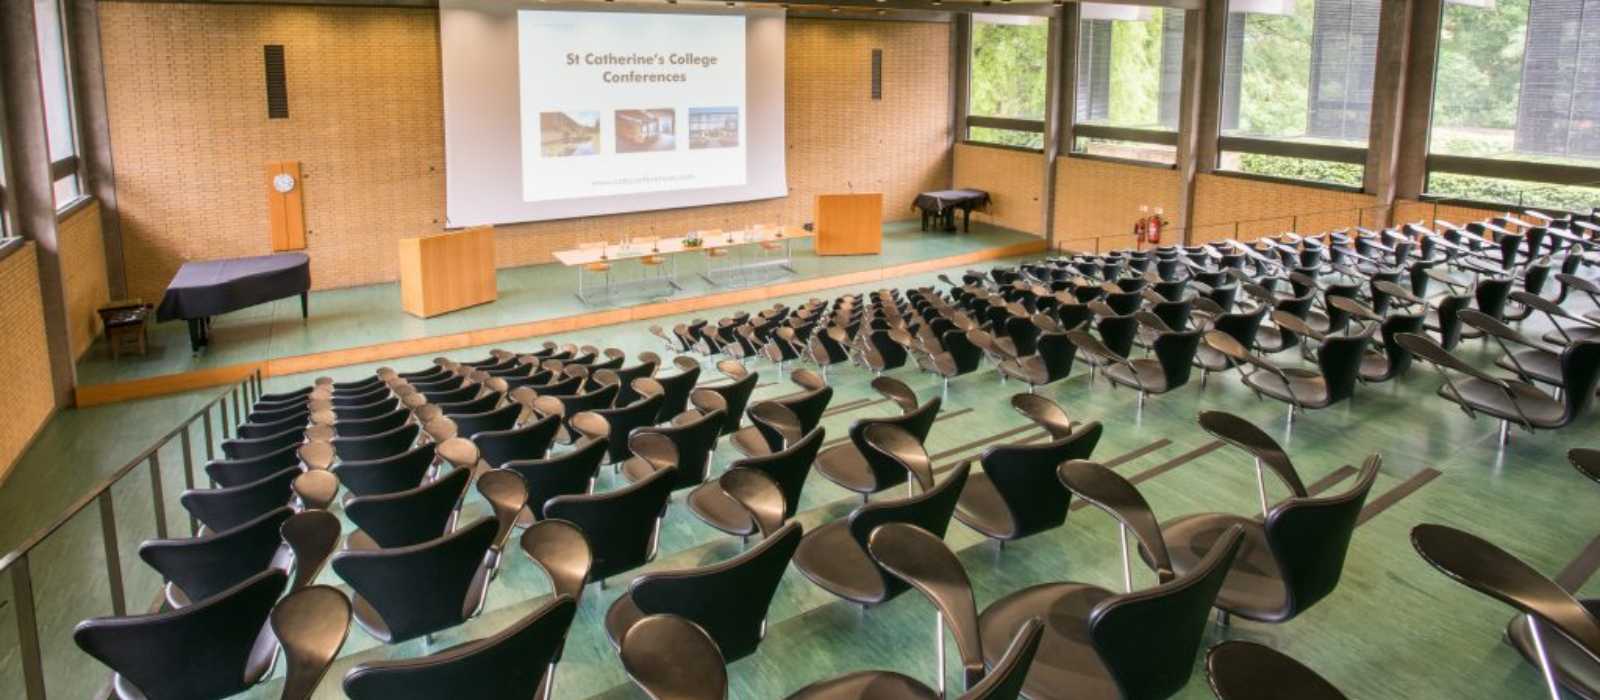 Large Lecture Theatre Interior